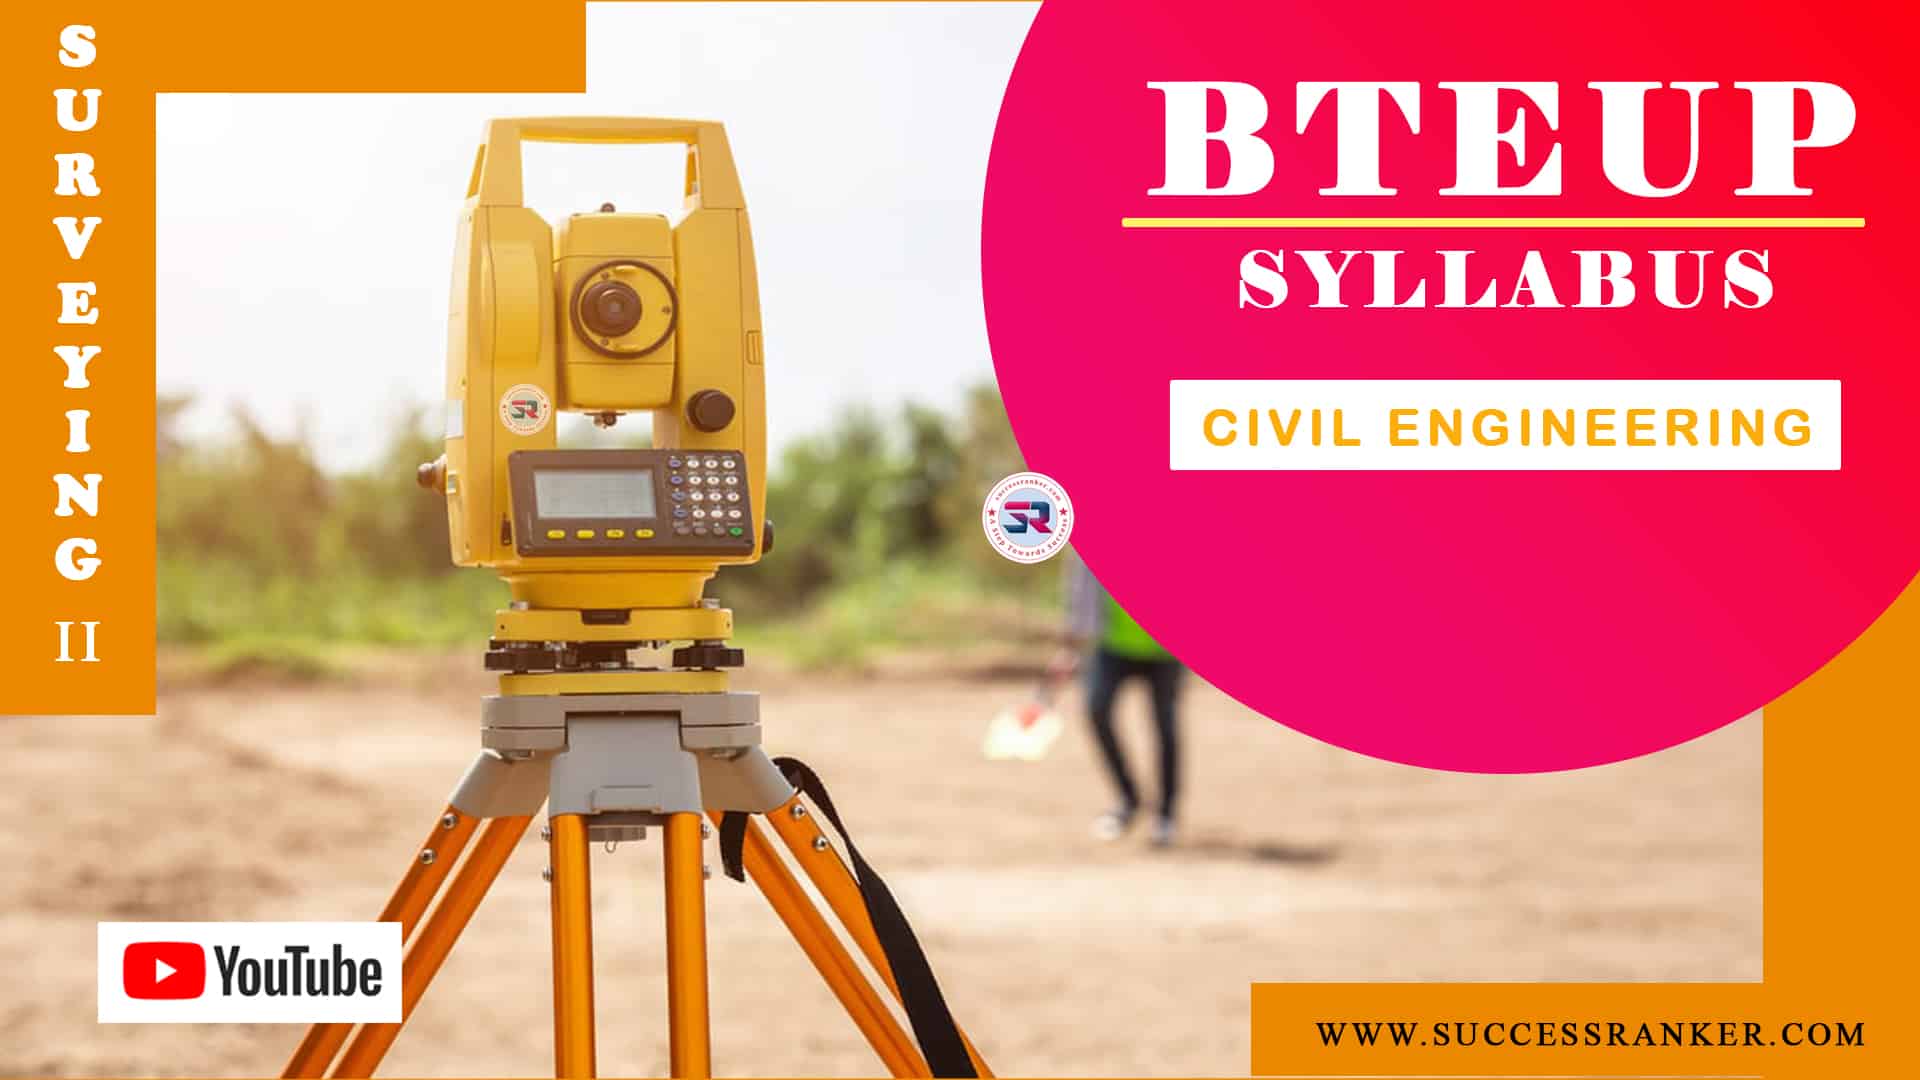 BTEUP Fifth Semester Surveying Syllabus